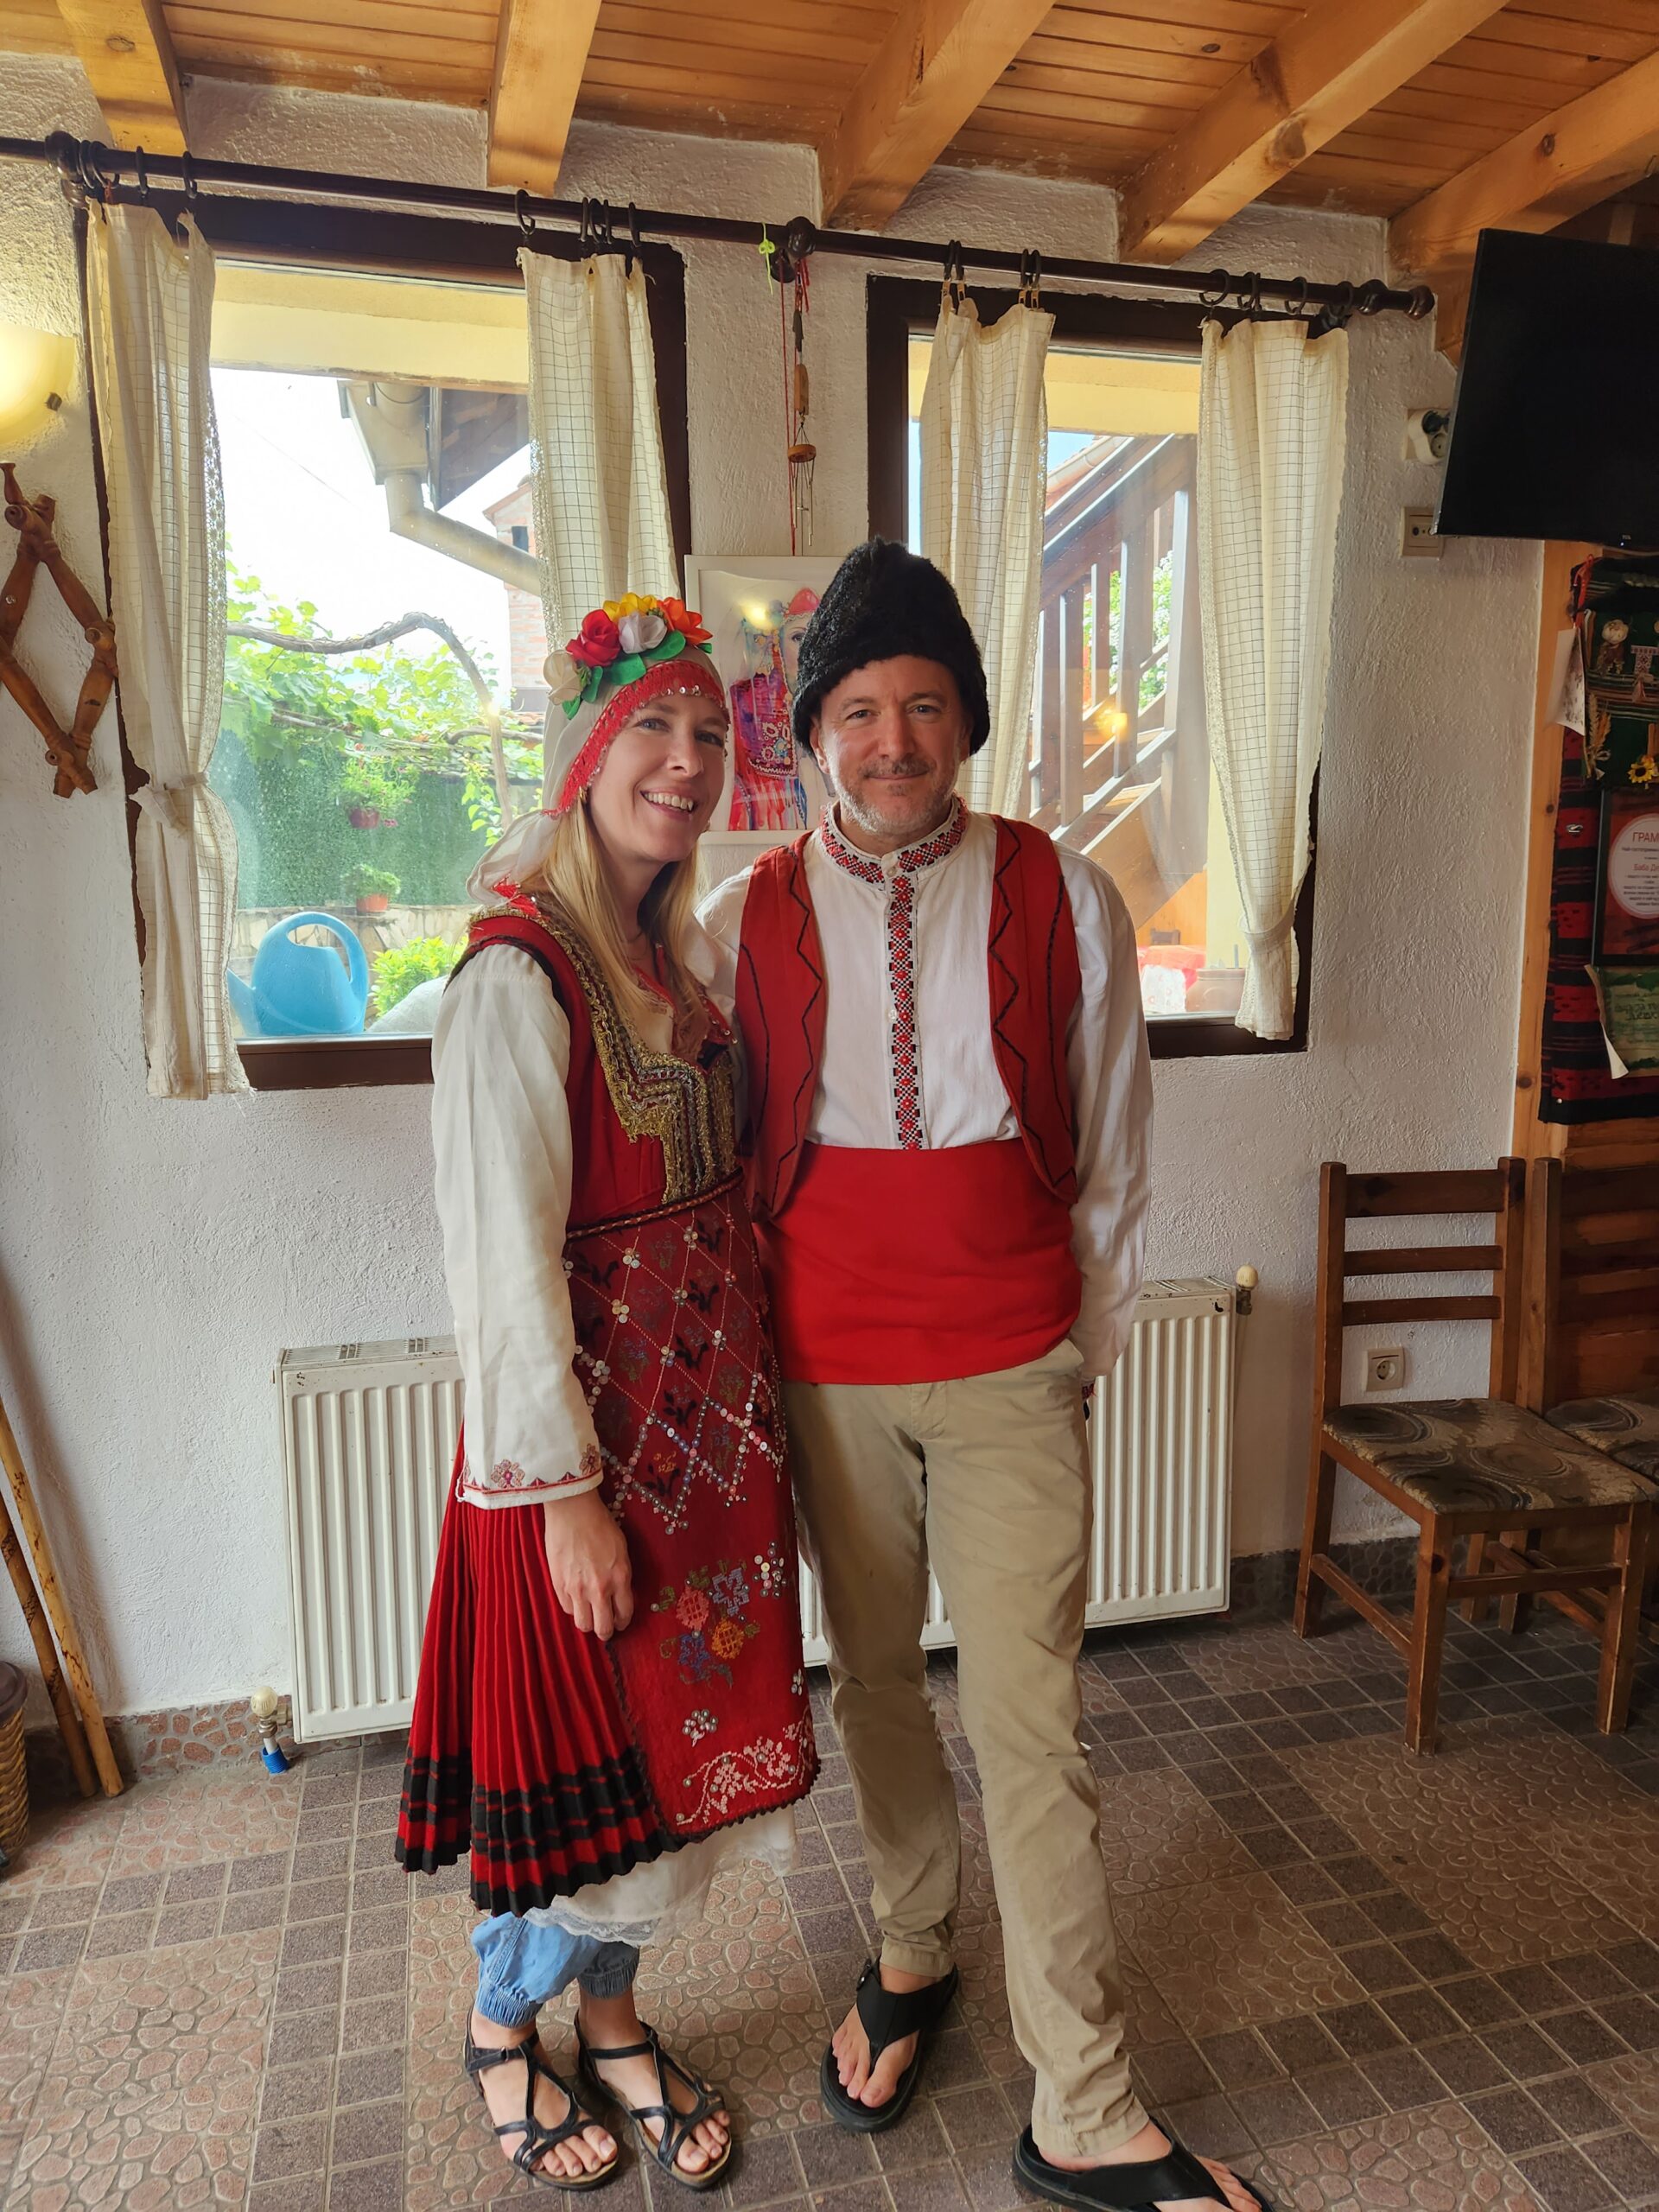 wandering hartz travel bloggers dressed in traditional bulgarian attire